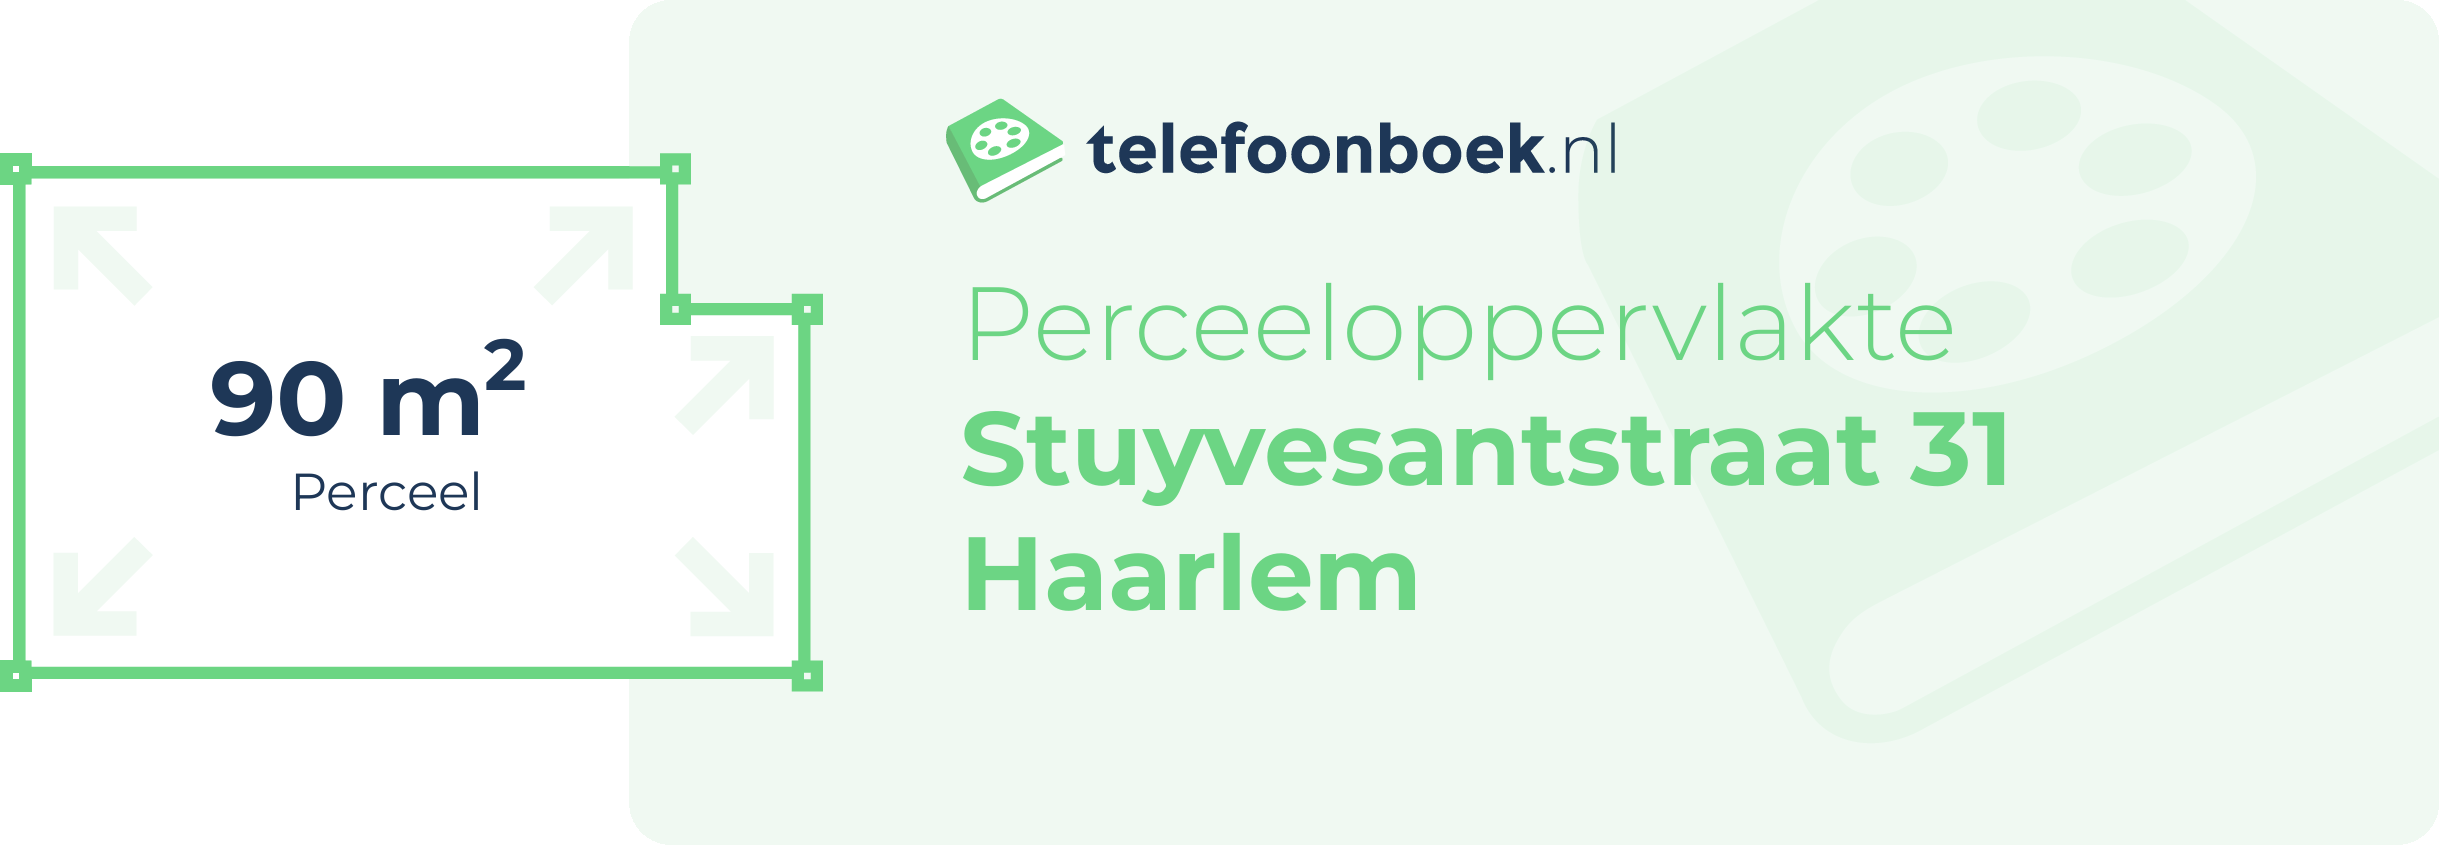 Perceeloppervlakte Stuyvesantstraat 31 Haarlem